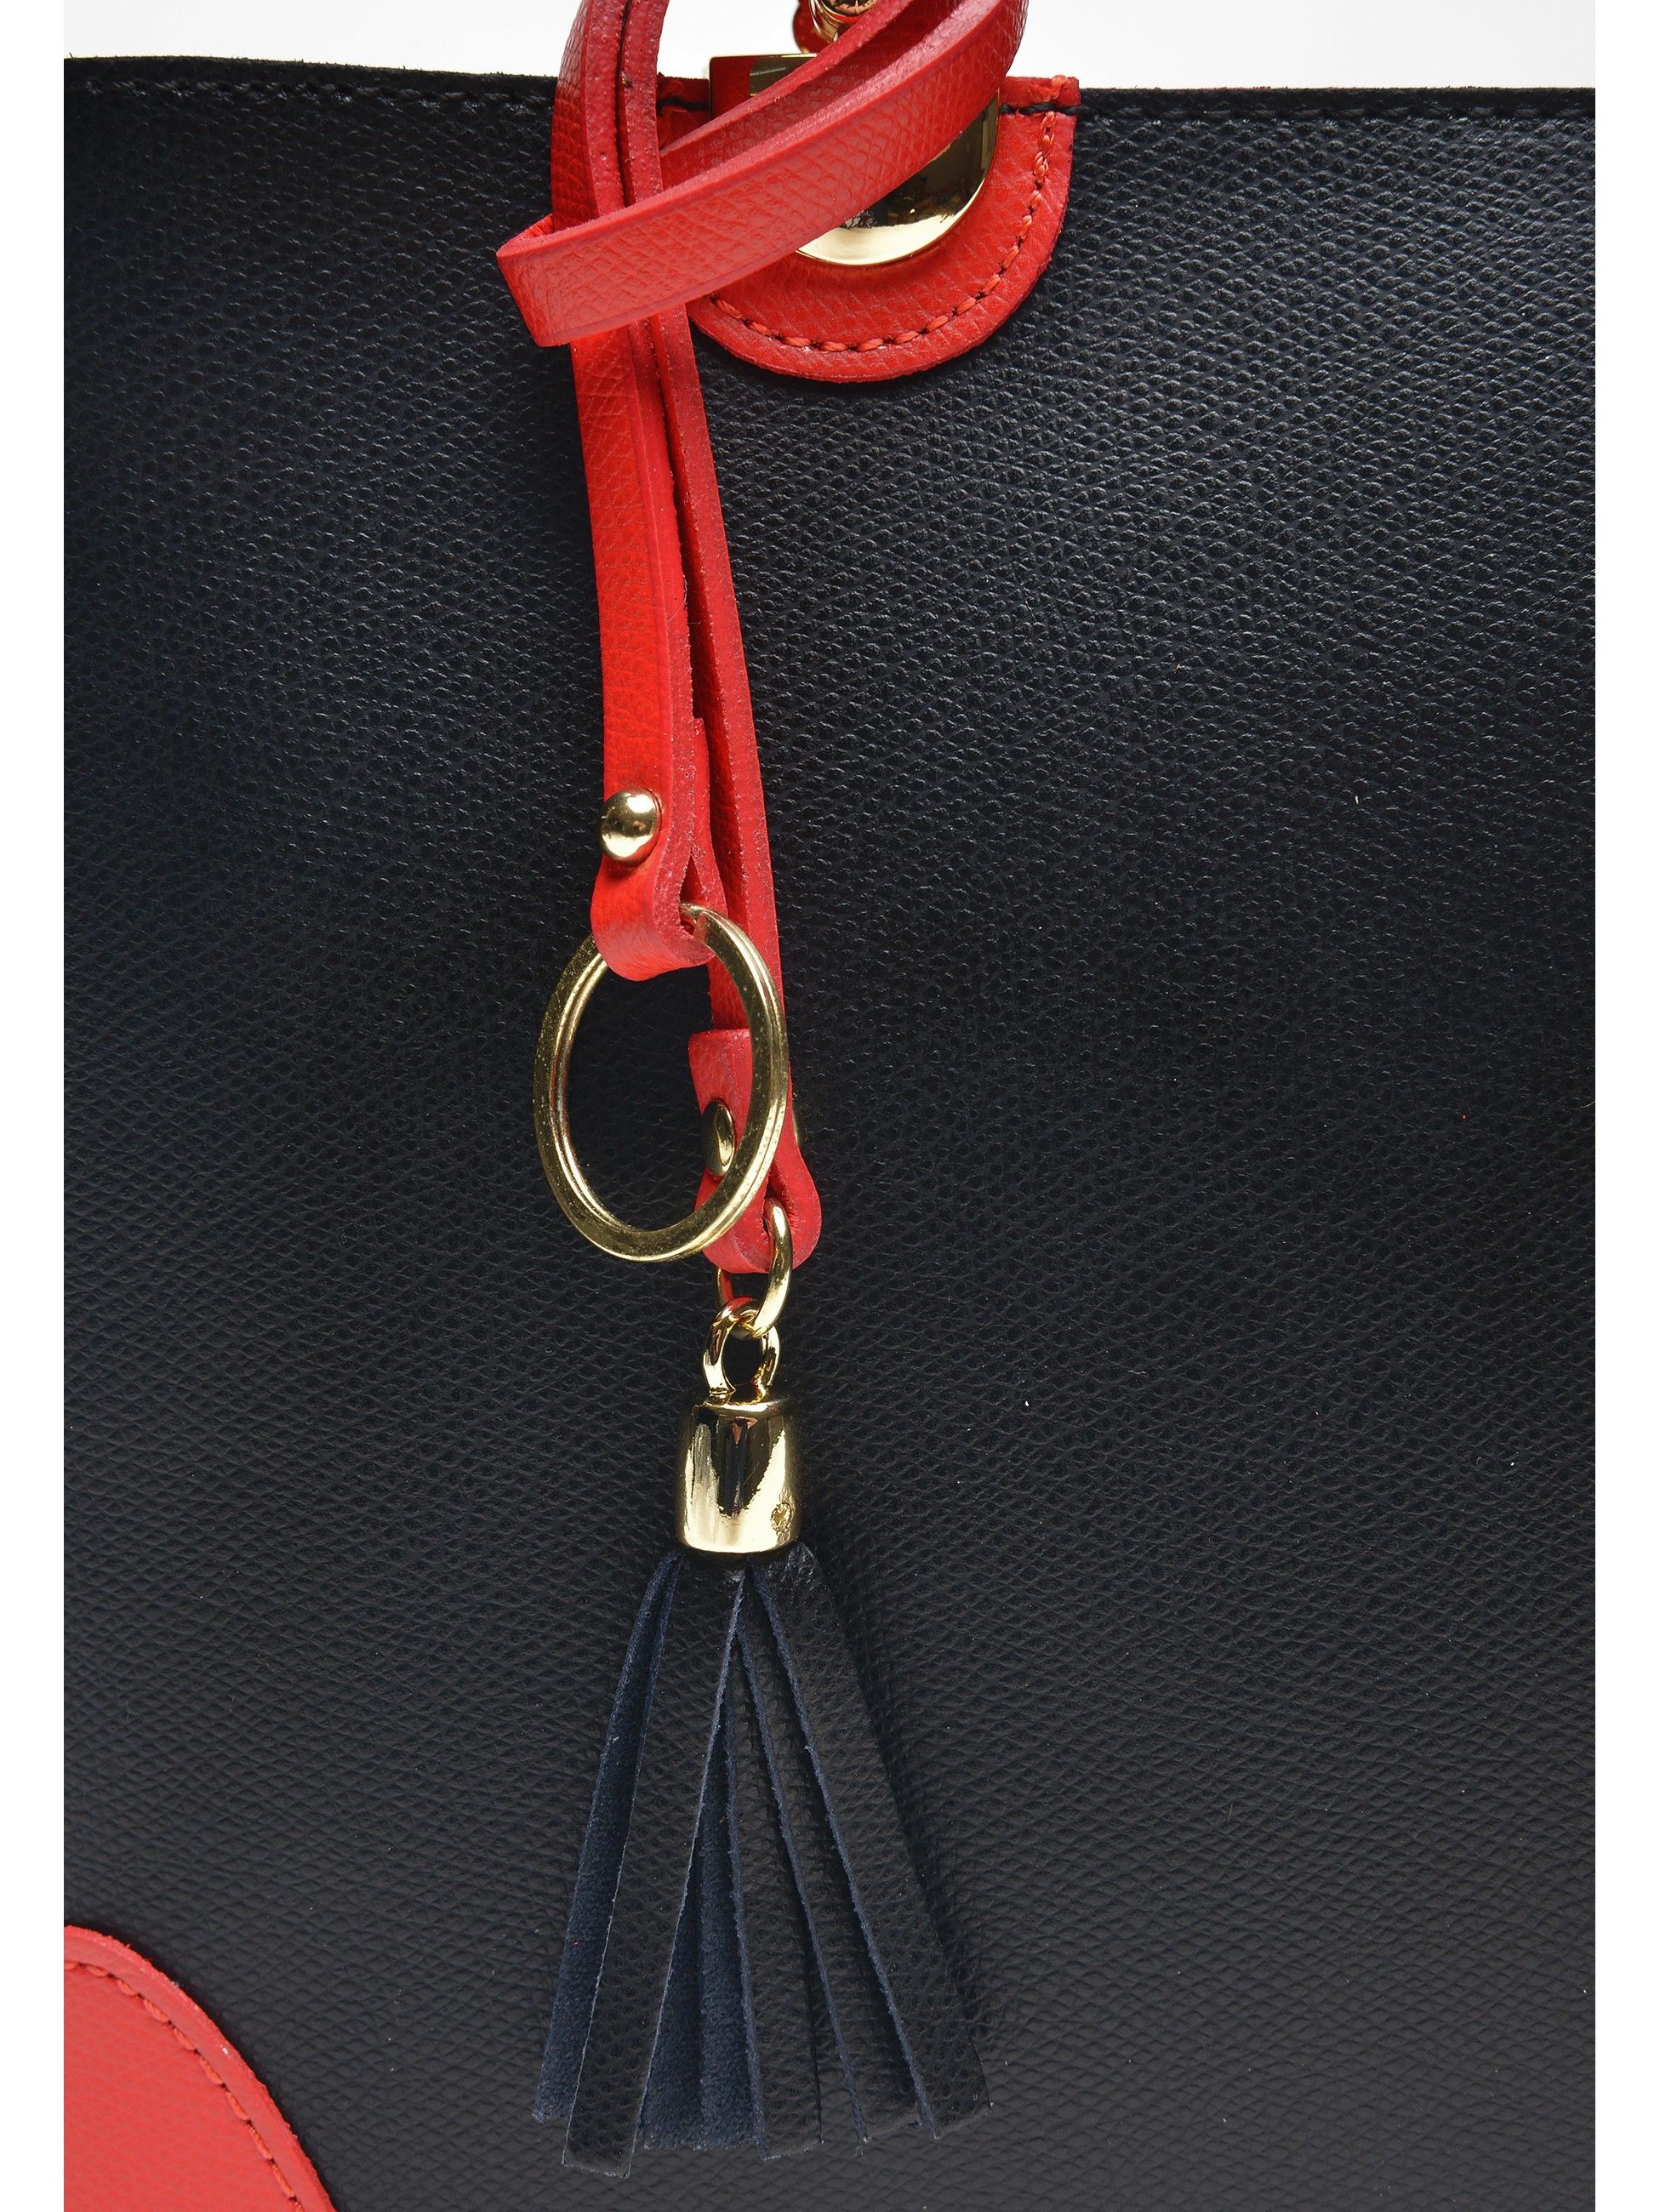 Top Handle Bag
100% cow leather
Two top handles: 36 cm 
Interior zip organizing pocket
Tassel accent on front
Detachable shoulder strap
Dimensions: 23.5x36x12 cm